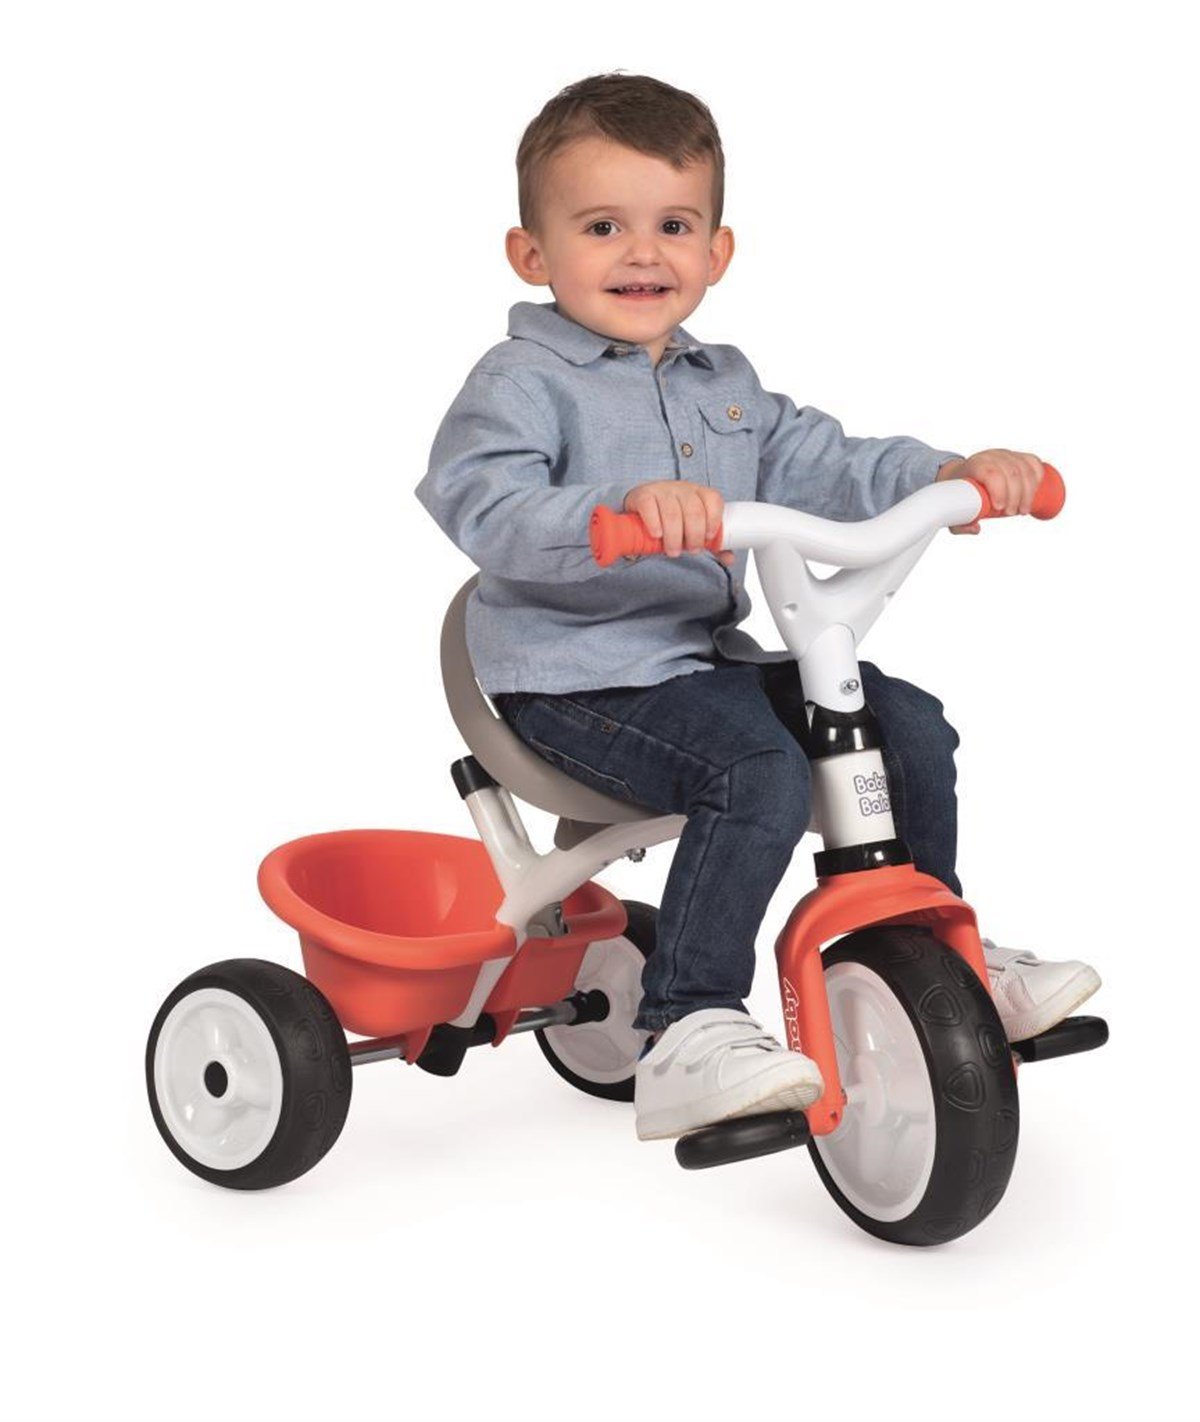 Smoby 3 Tekerlekli Çocuk Bisikleti 3'ü1 Arada Set - Kırmızı 741105 - Toysall